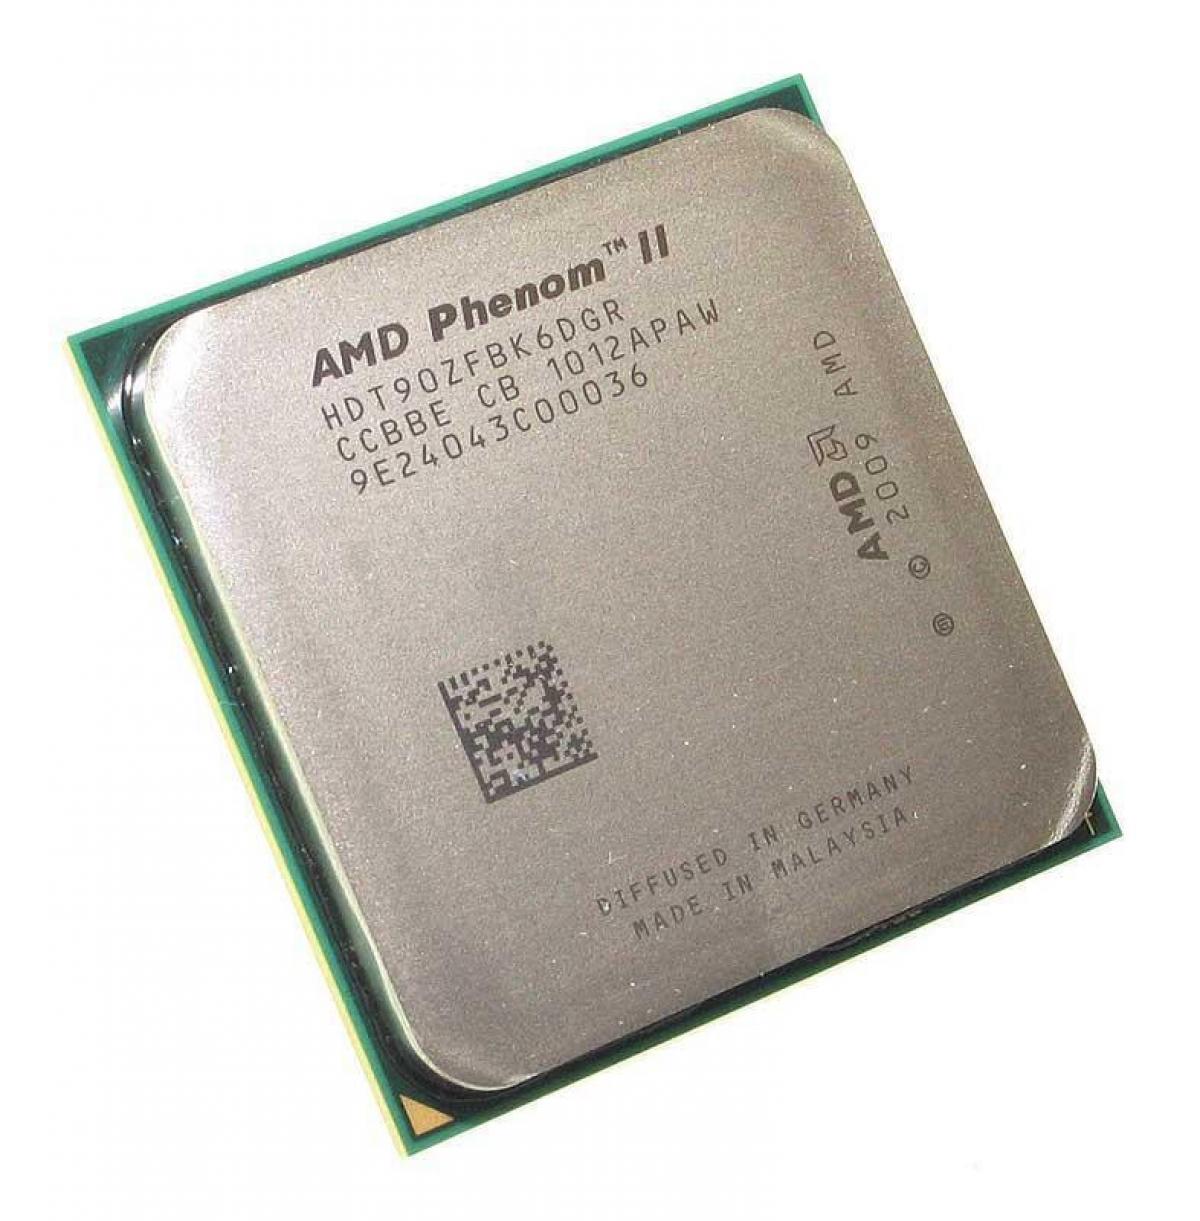 Amd phenom ii x6 processor. AMD Phenom 2 x6 1090t. AMD Phenom II x6 1090t Black Edition. Процессор Phenom II x6. AMD Phenom II 1090t.